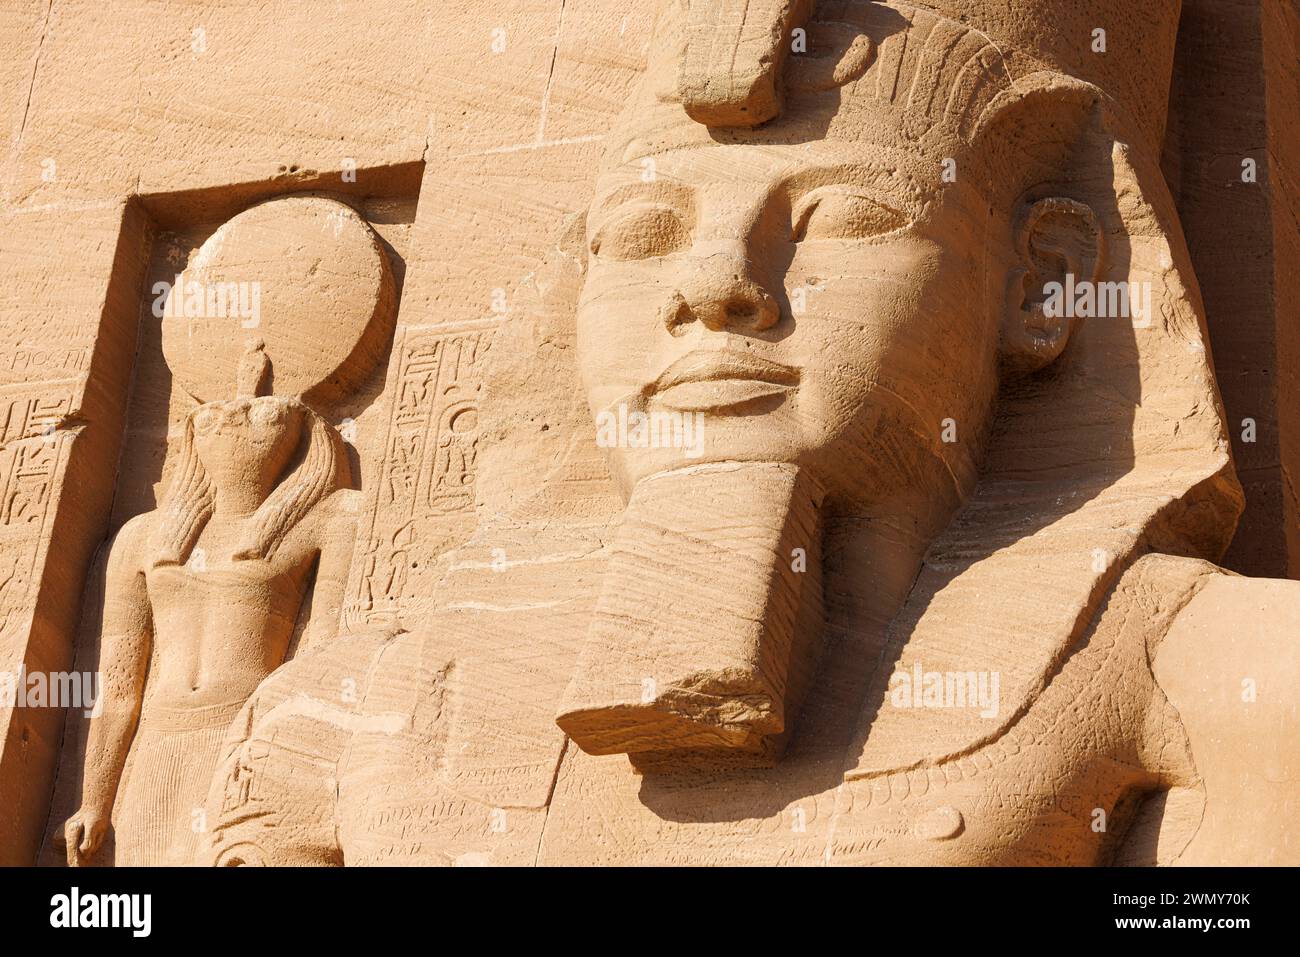 Egitto, Abu Simbel, monumenti nubiani da Abu Simbel a file, patrimonio mondiale dell'UNESCO, tempio Ramses II, Ramses II e Ra Horakhty Foto Stock